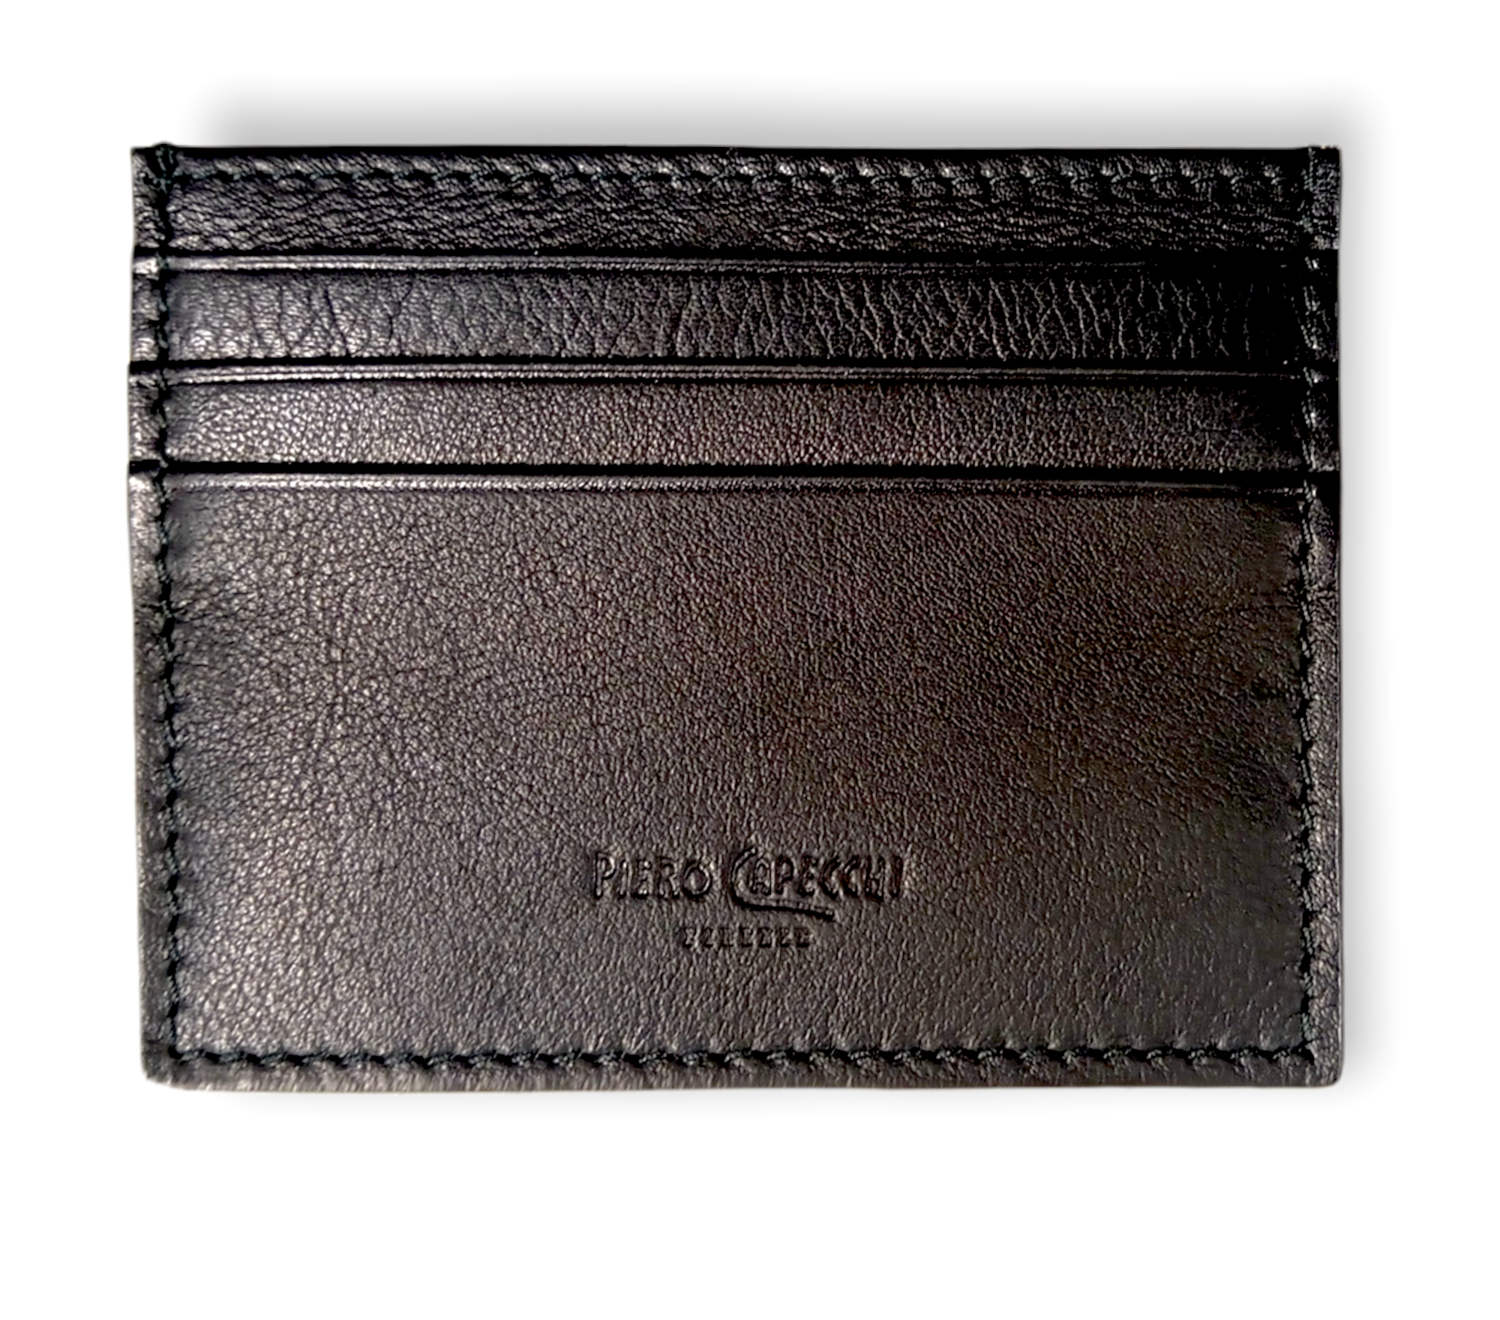 Slim leather card holder. Minimalist leather wallet